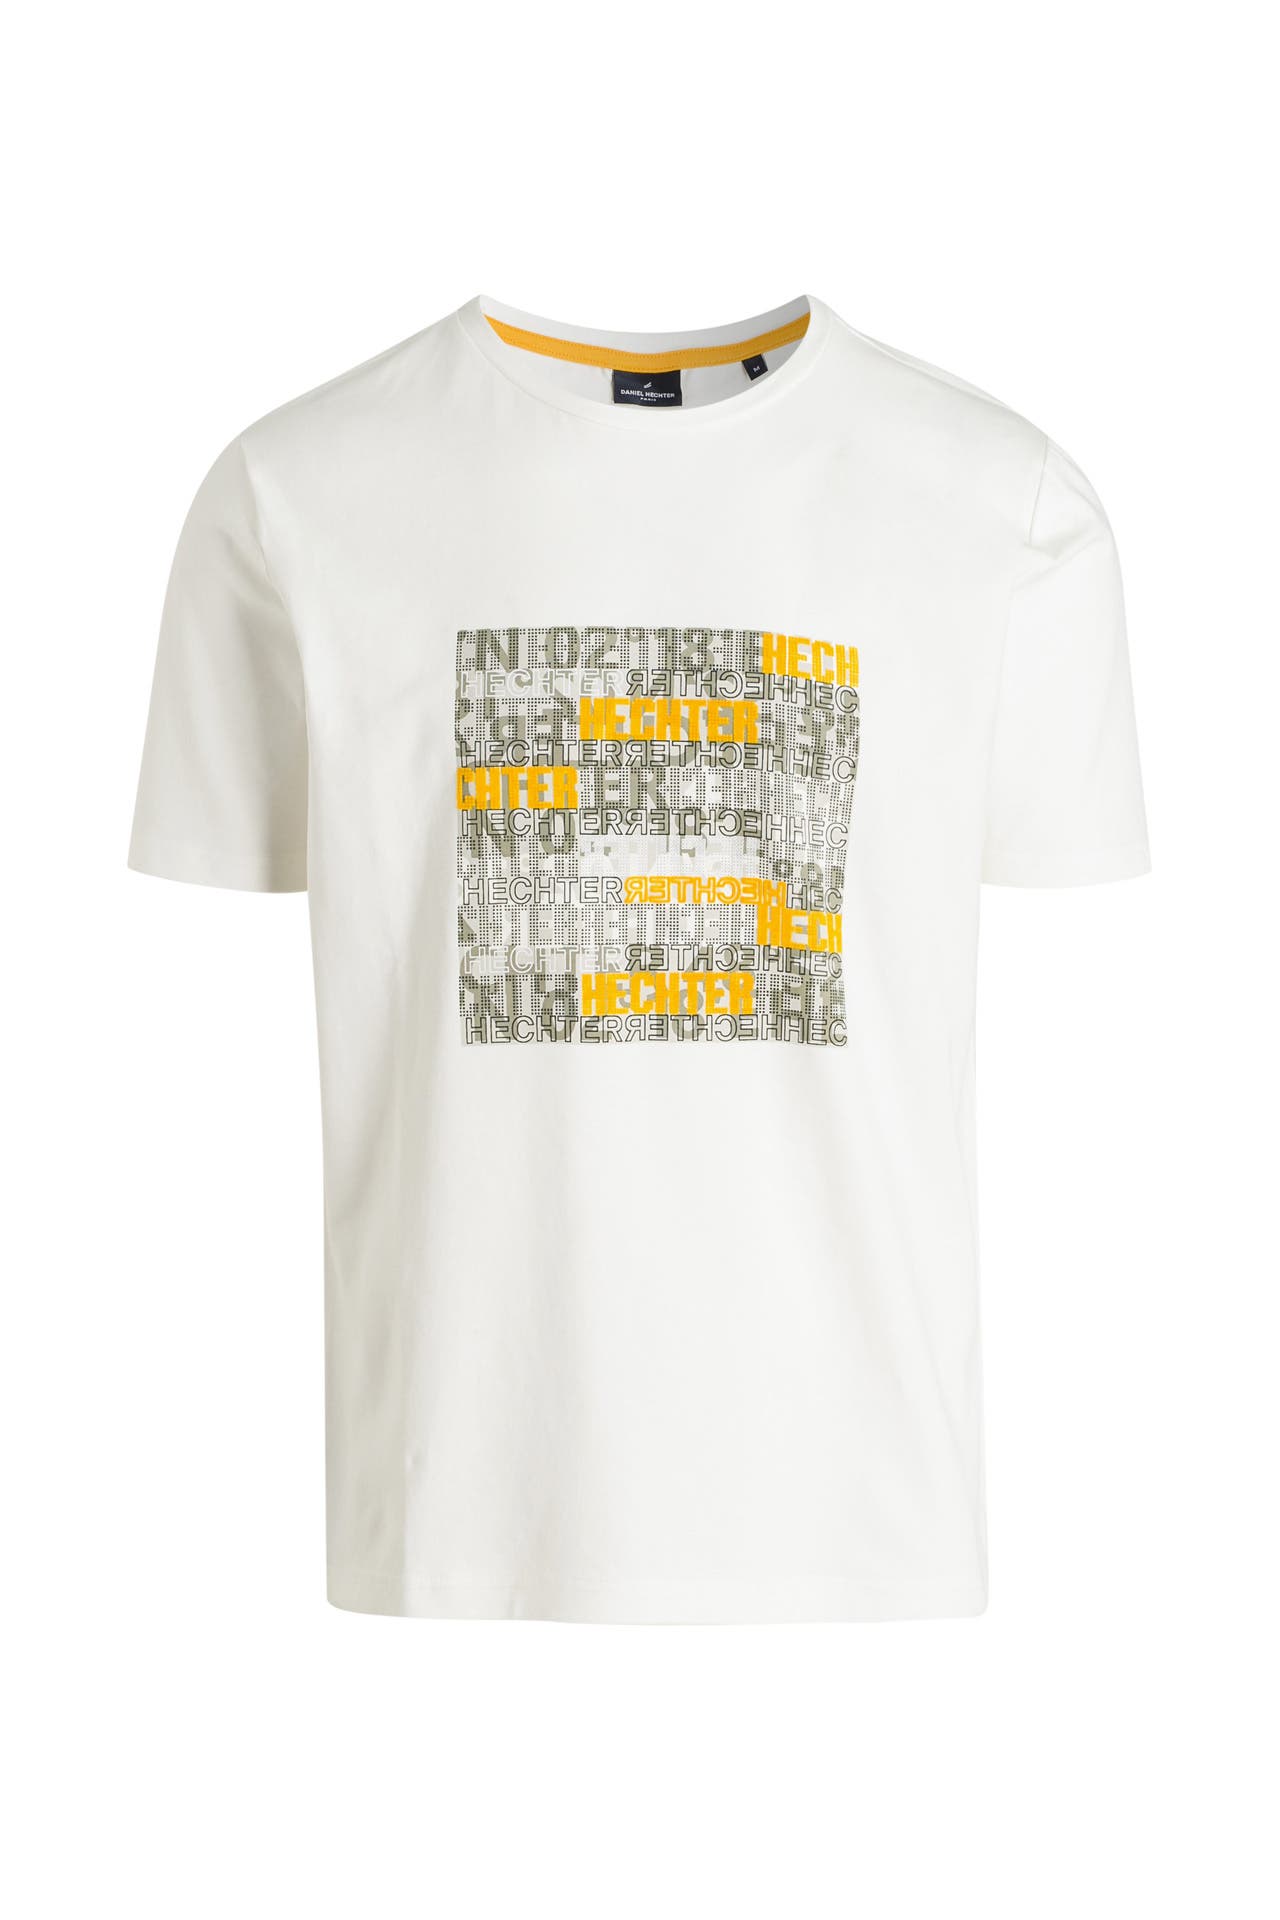 - | weiß » kaufen T-Shirt online günstig HECHTER Paris Outletcity